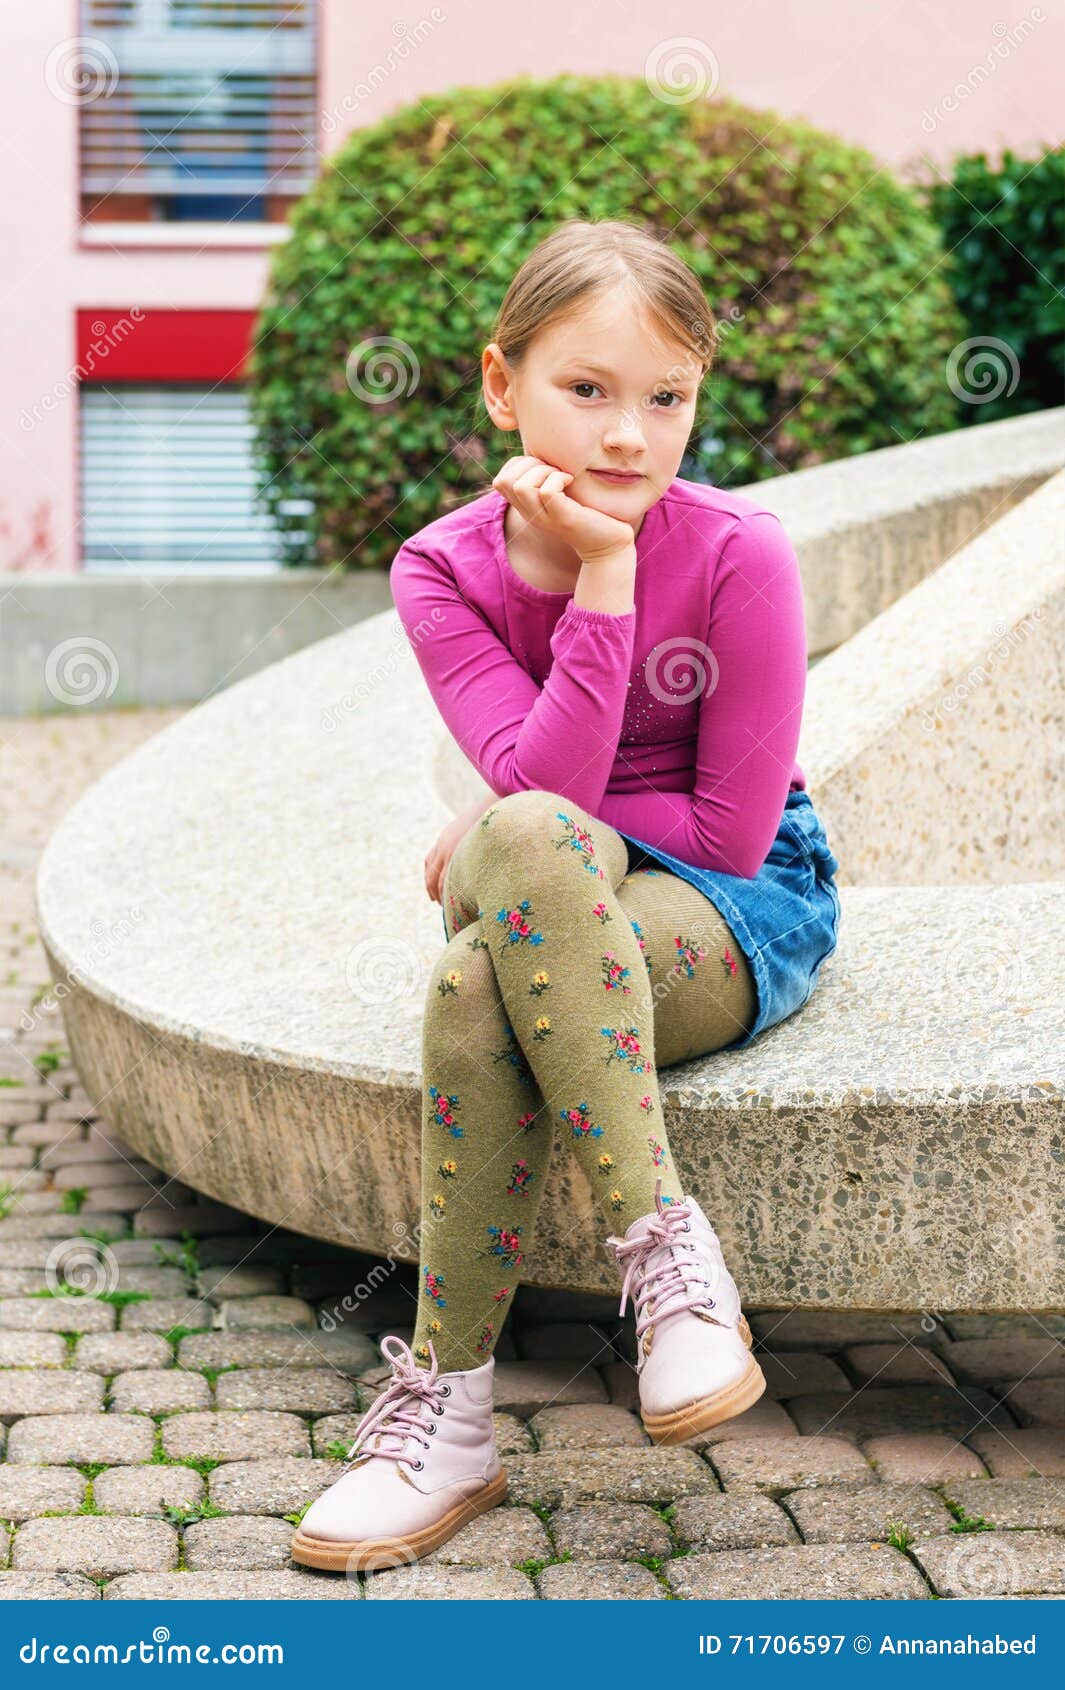 https://thumbs.dreamstime.com/z/portrait-cute-little-girl-fashion-city-wearing-pink-shoes-t-shirt-denim-skirt-green-tights-71706597.jpg